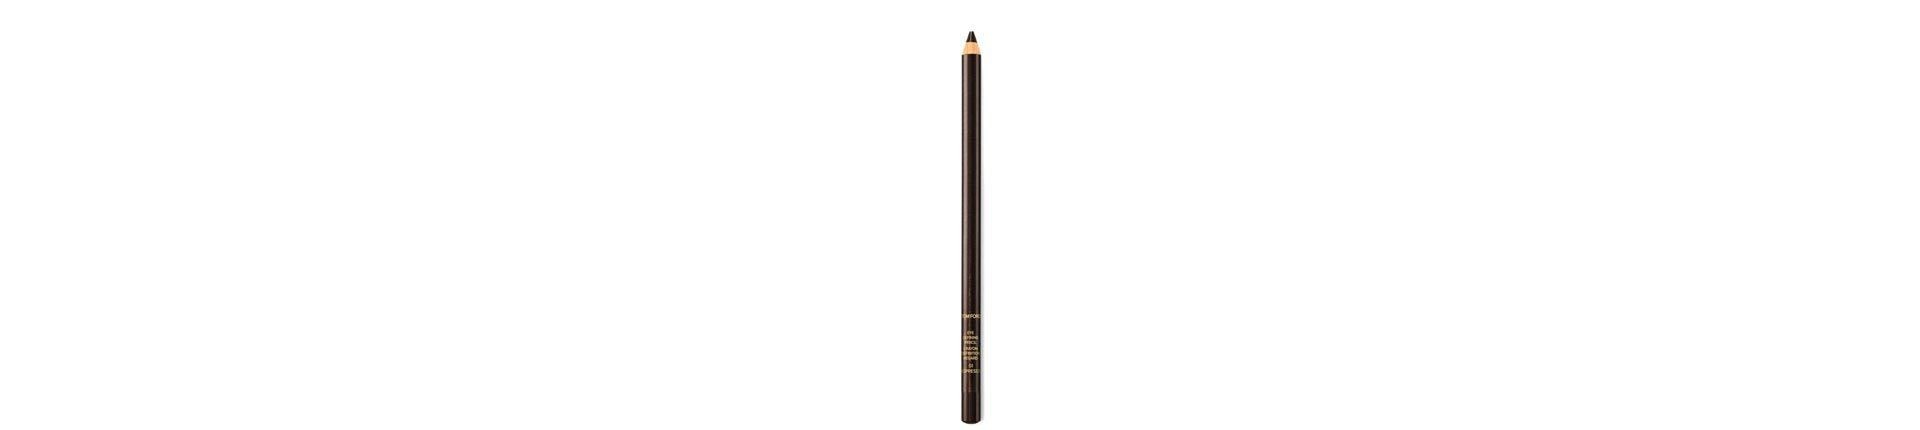 Карандаш TOM FORD eye defining pencil, цвет ESPRESSO